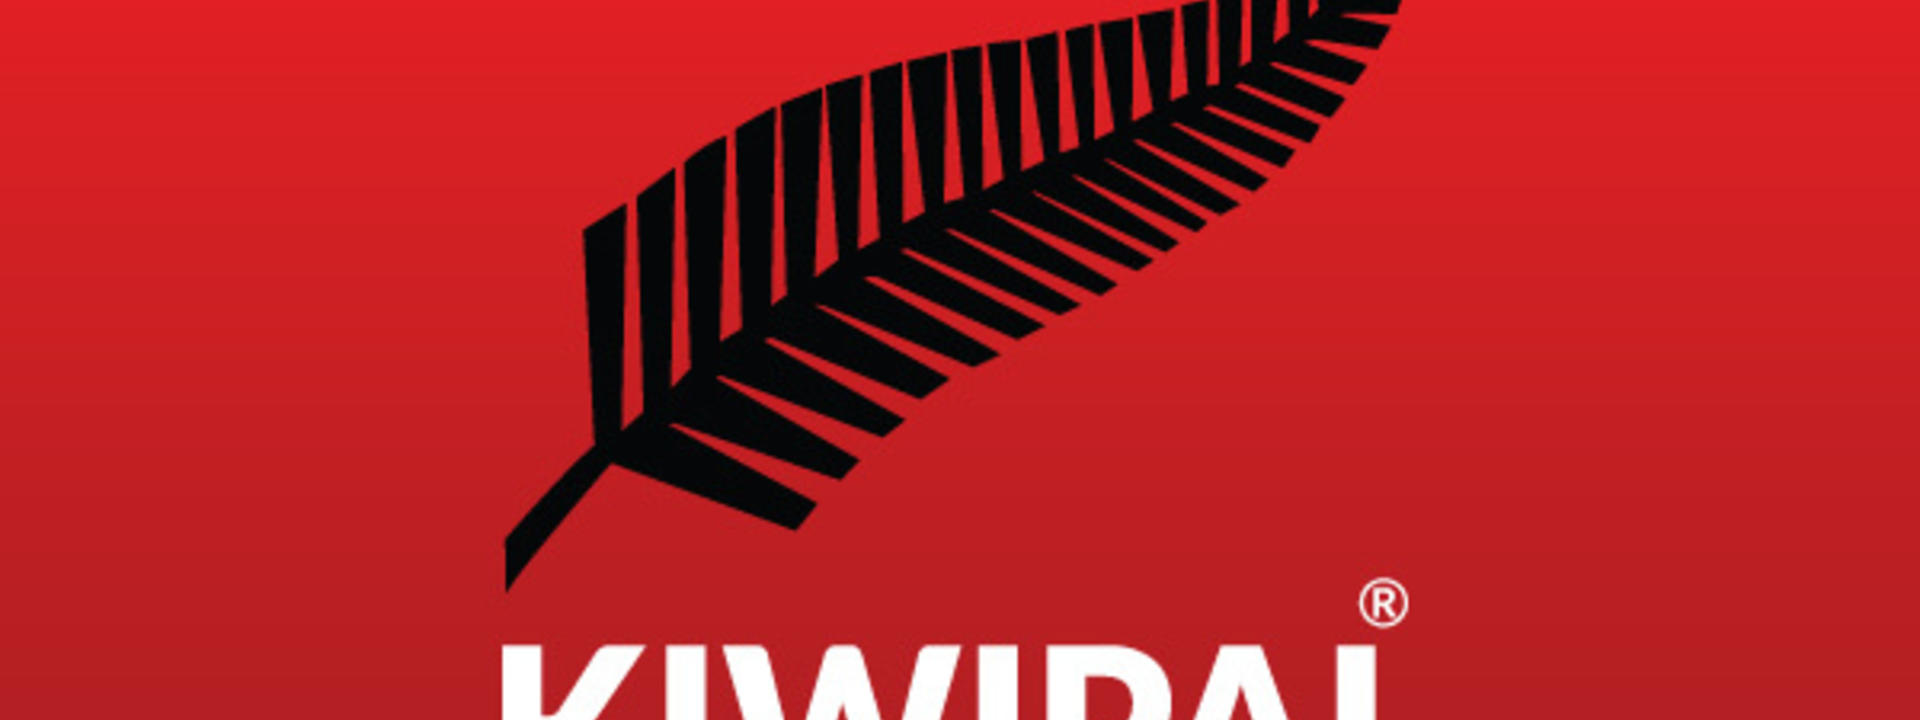 Logo: Kiwipal